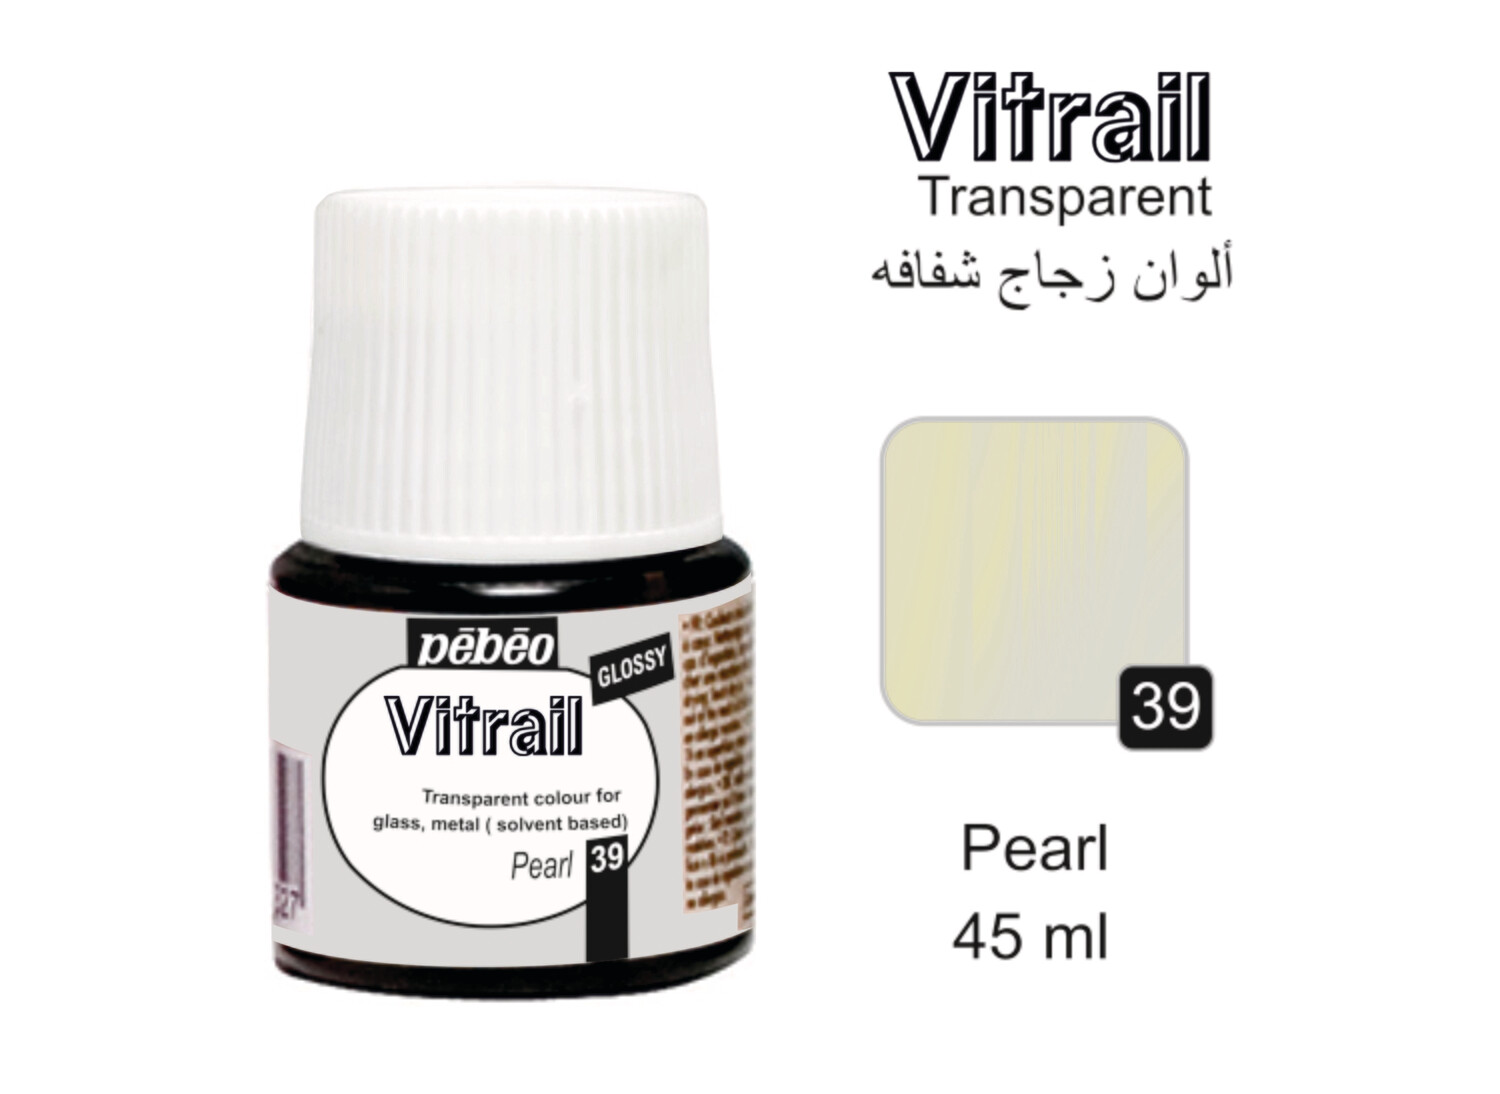 VITRAIL glass colors Pearl No. 39, 45 ml